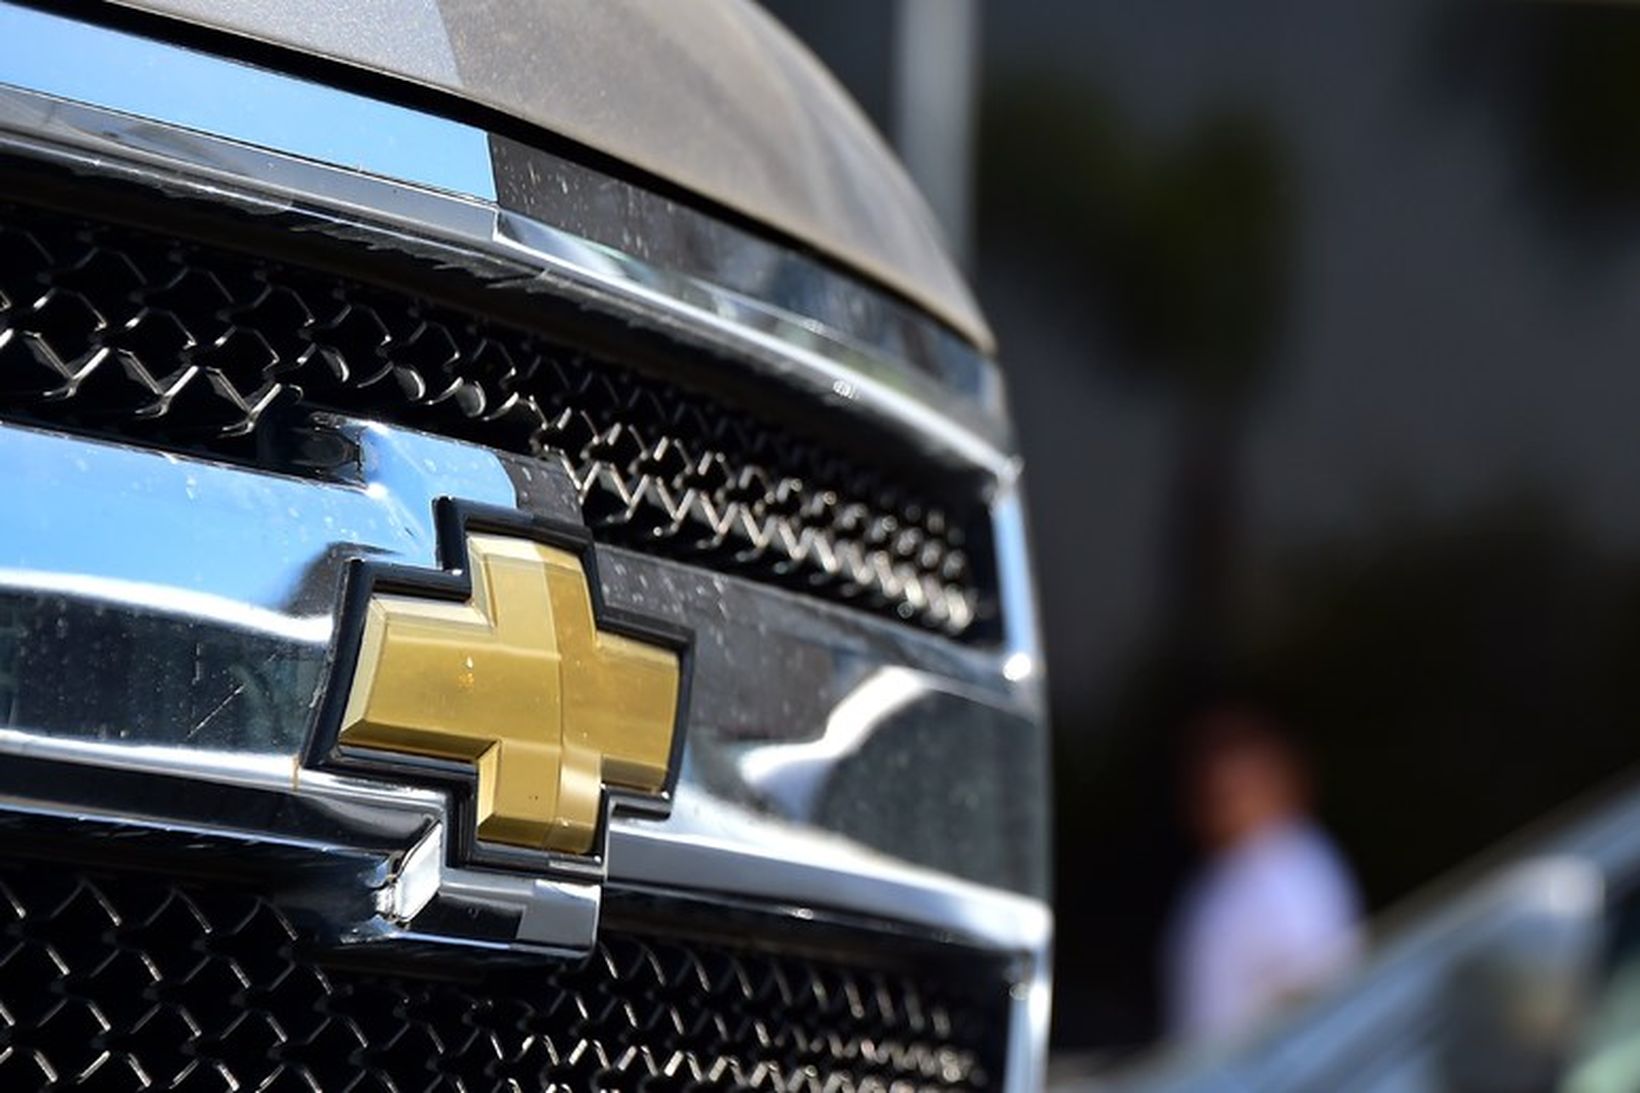 Táknmerki Chevrolet á Silverado pallbíl frá General Motors.